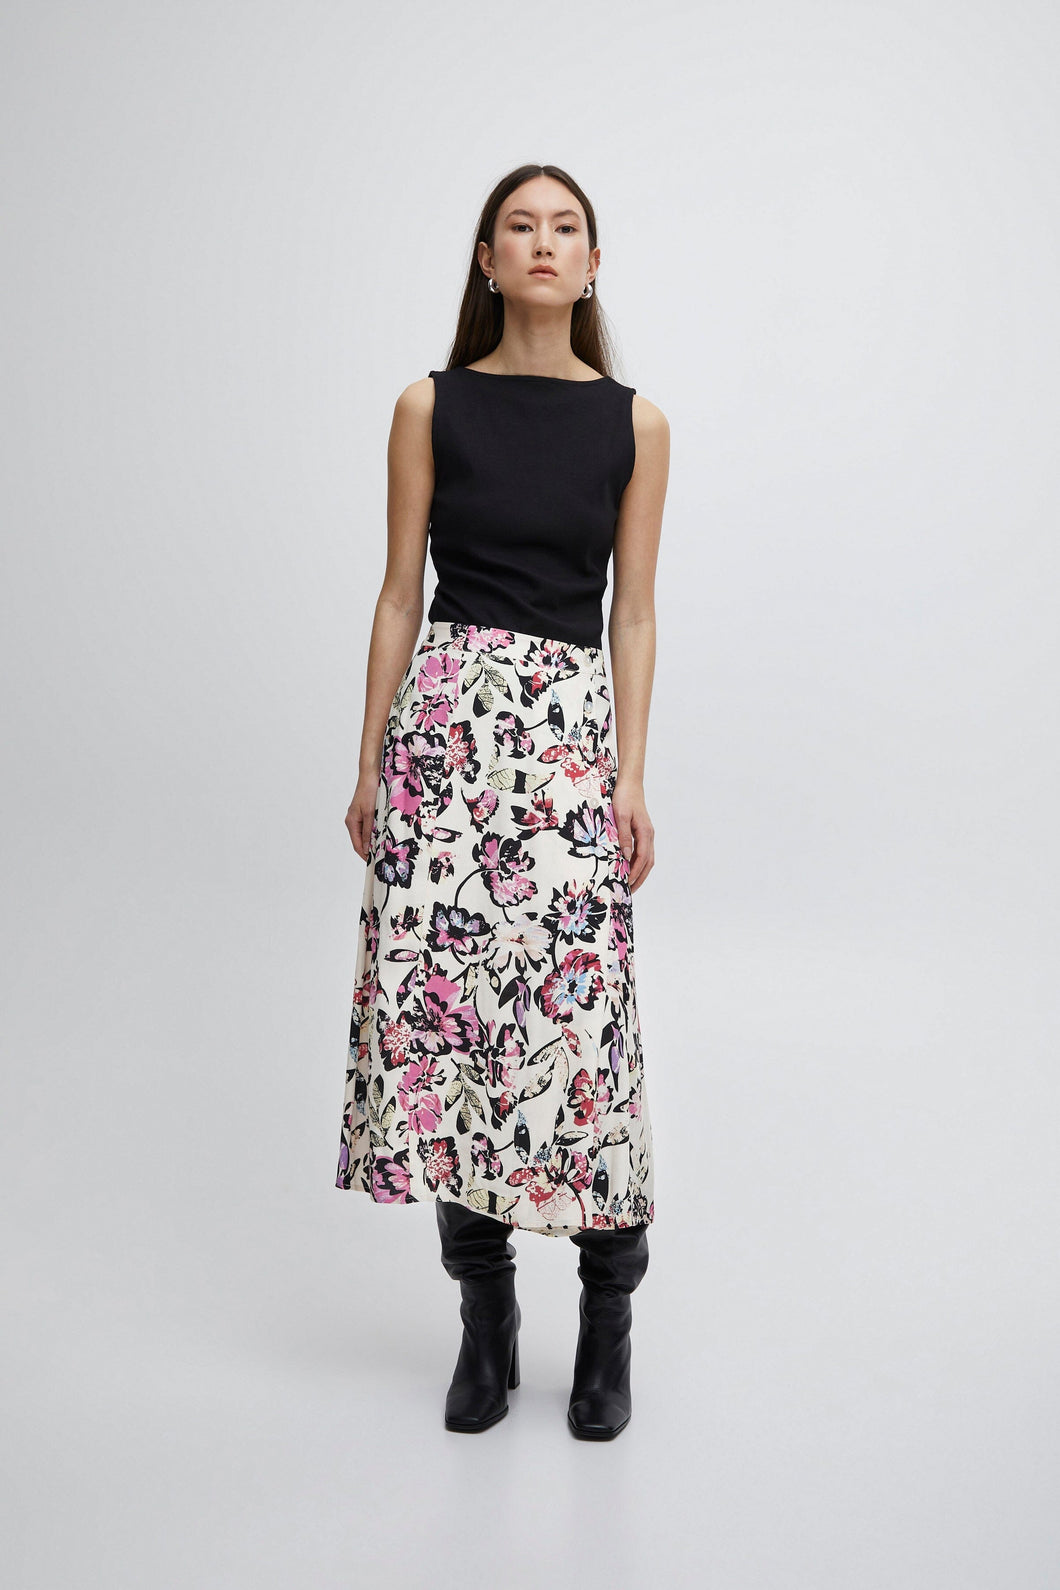 Villy Skirt in Crystal Gray Collage Print Beige Skirt Ichi 